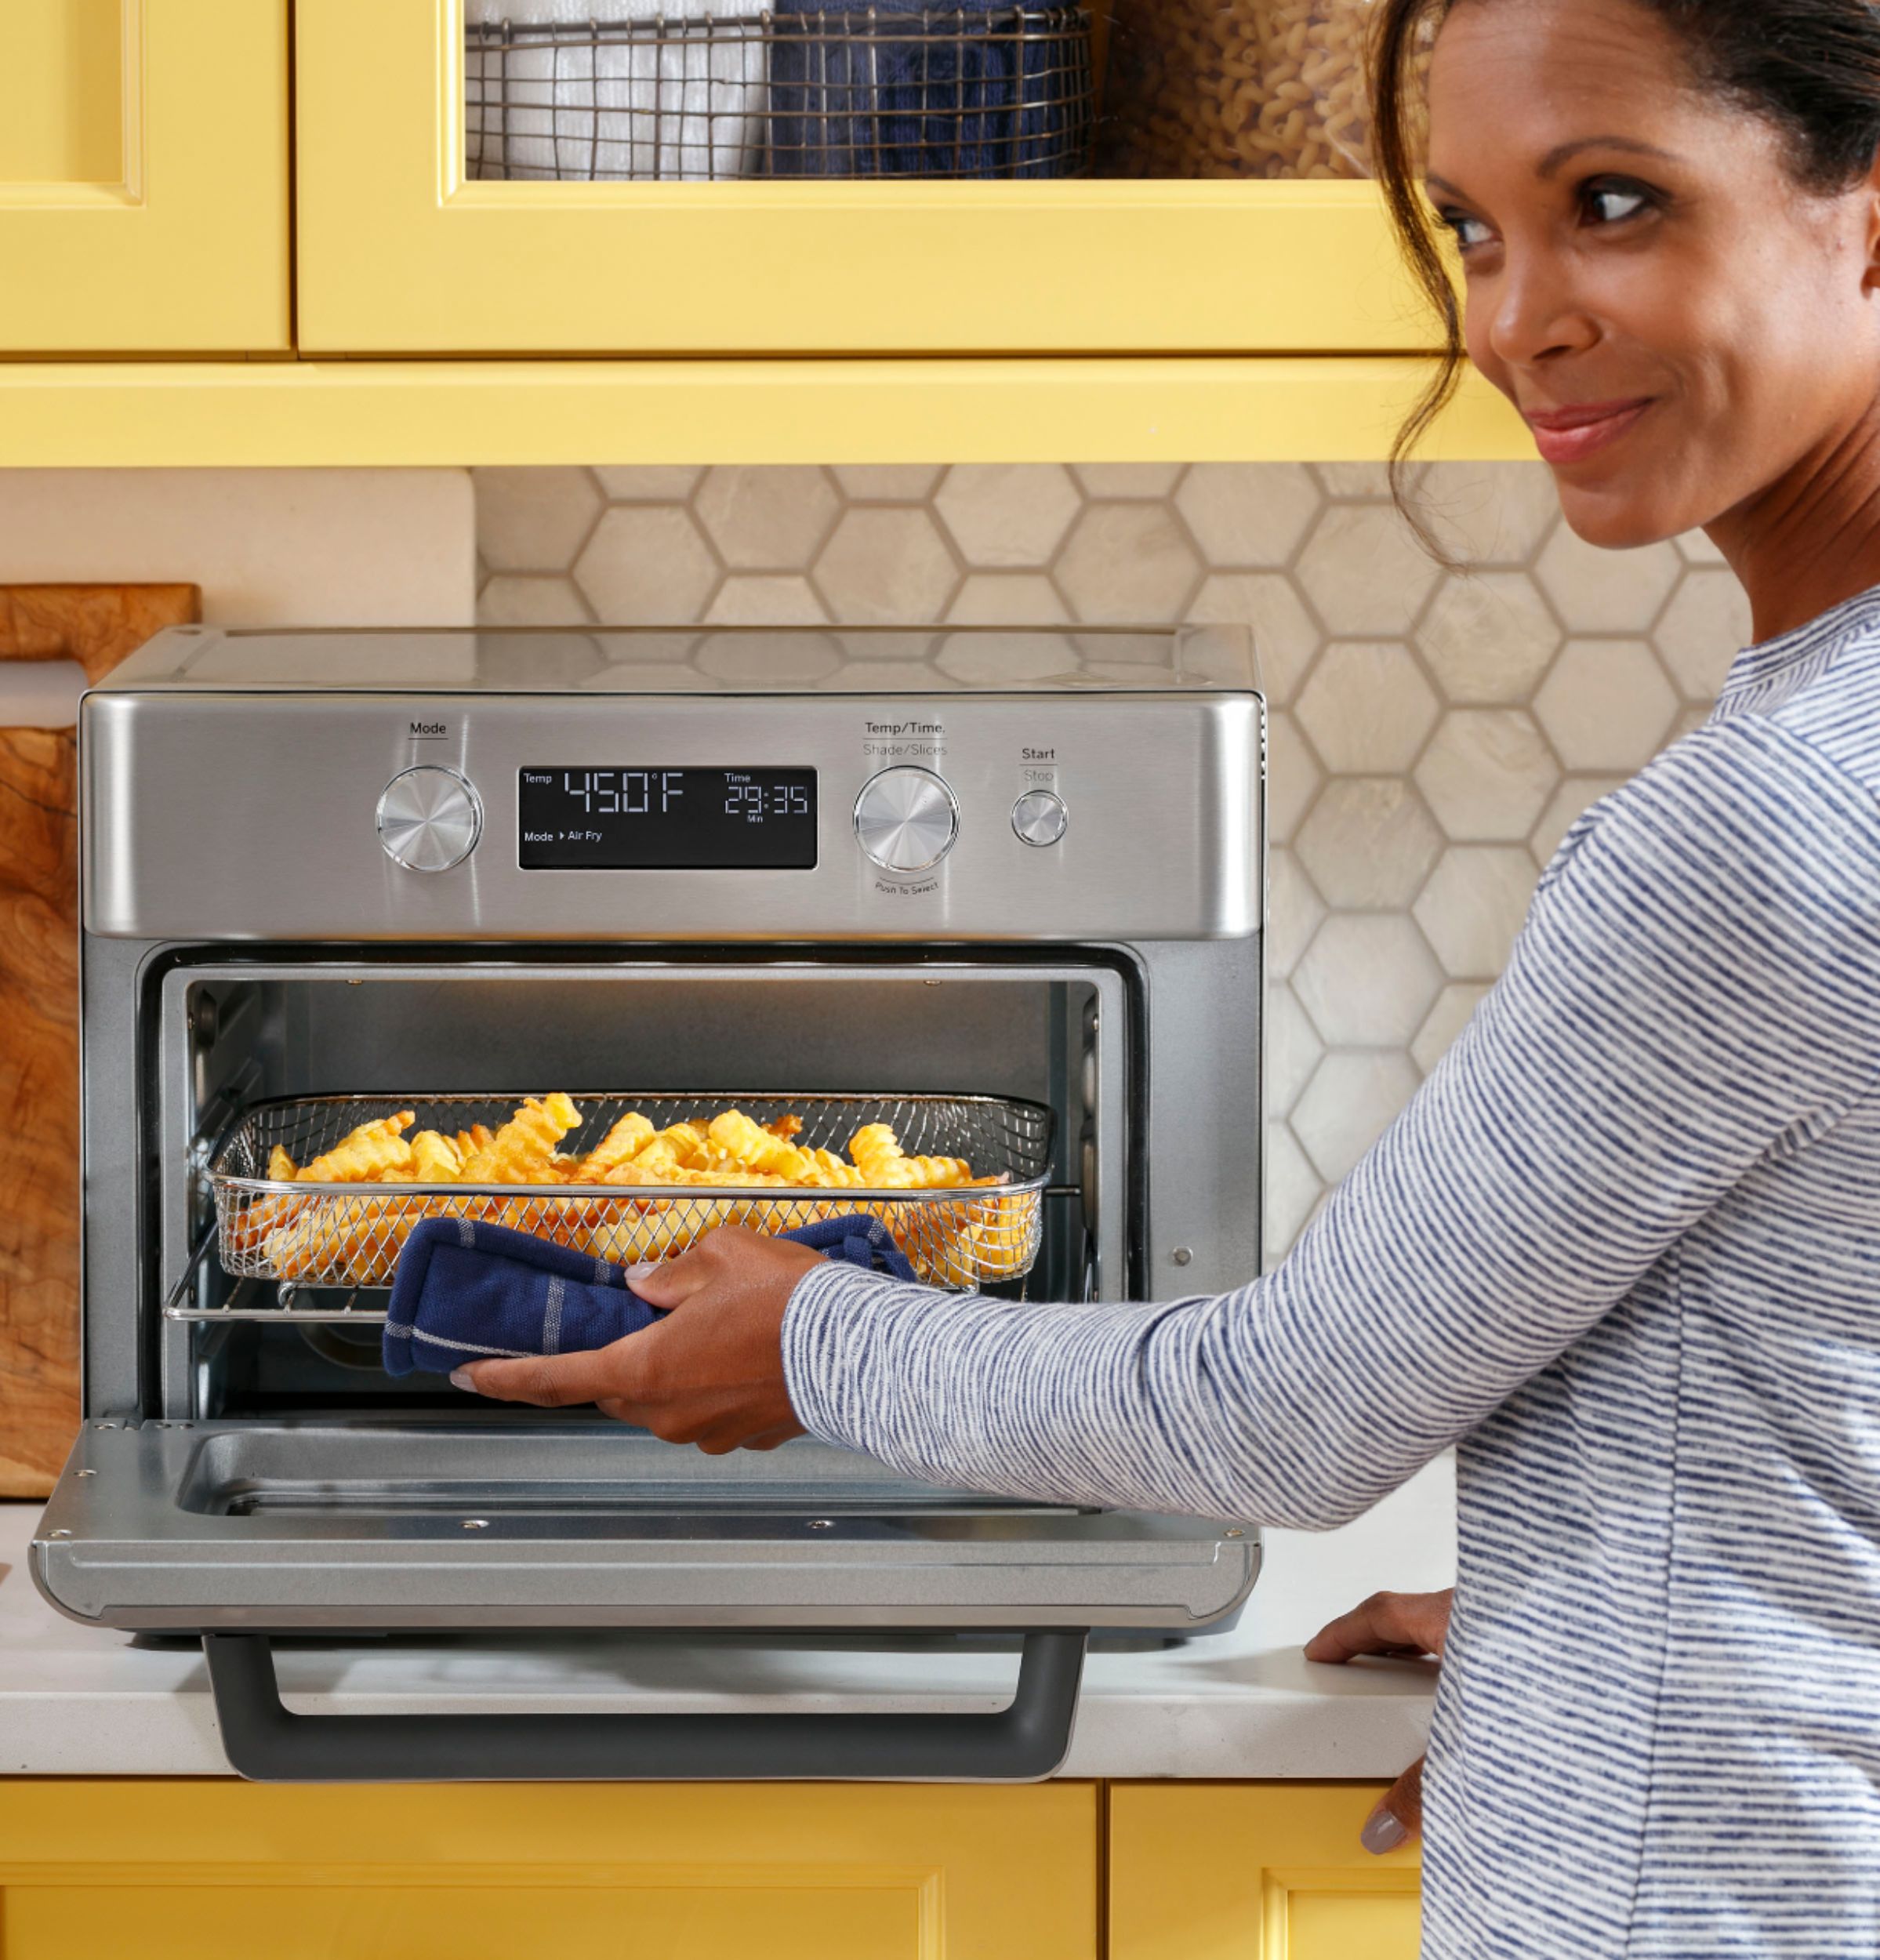 GE Stainless Steel Digital Air Fry 8-in-1 Toaster Oven